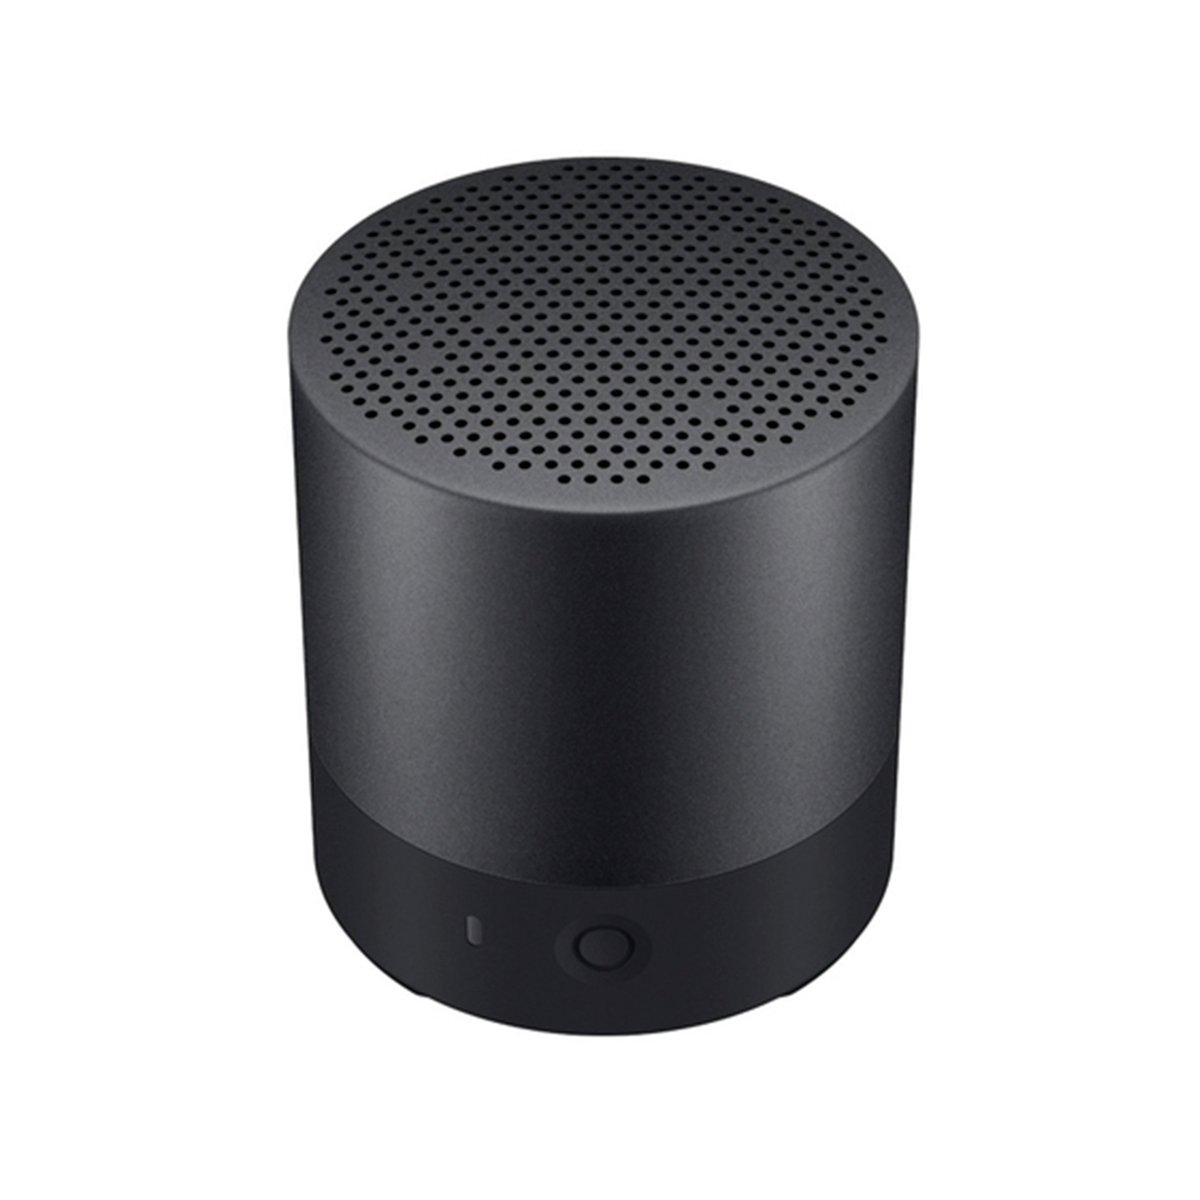 Huawei CM510 3w Mini (Pack of 2)Bluetooth Speaker - Black (HUW-CM510-BTSPKR-BLK)